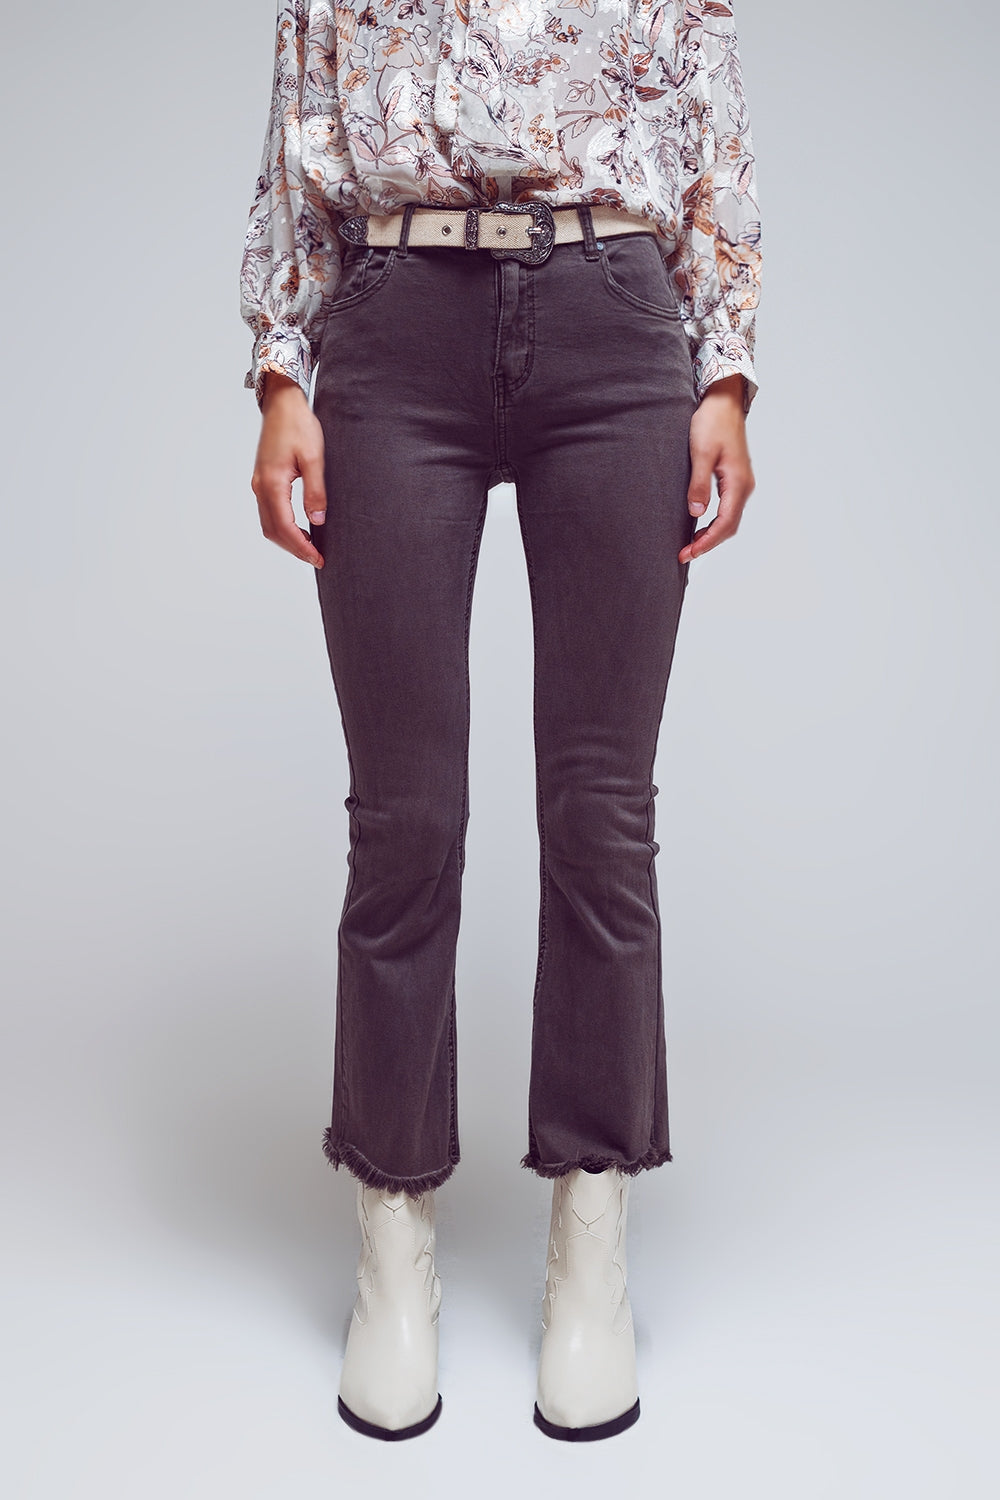 Q2 Flare jeans with raw hem edge in dark grey